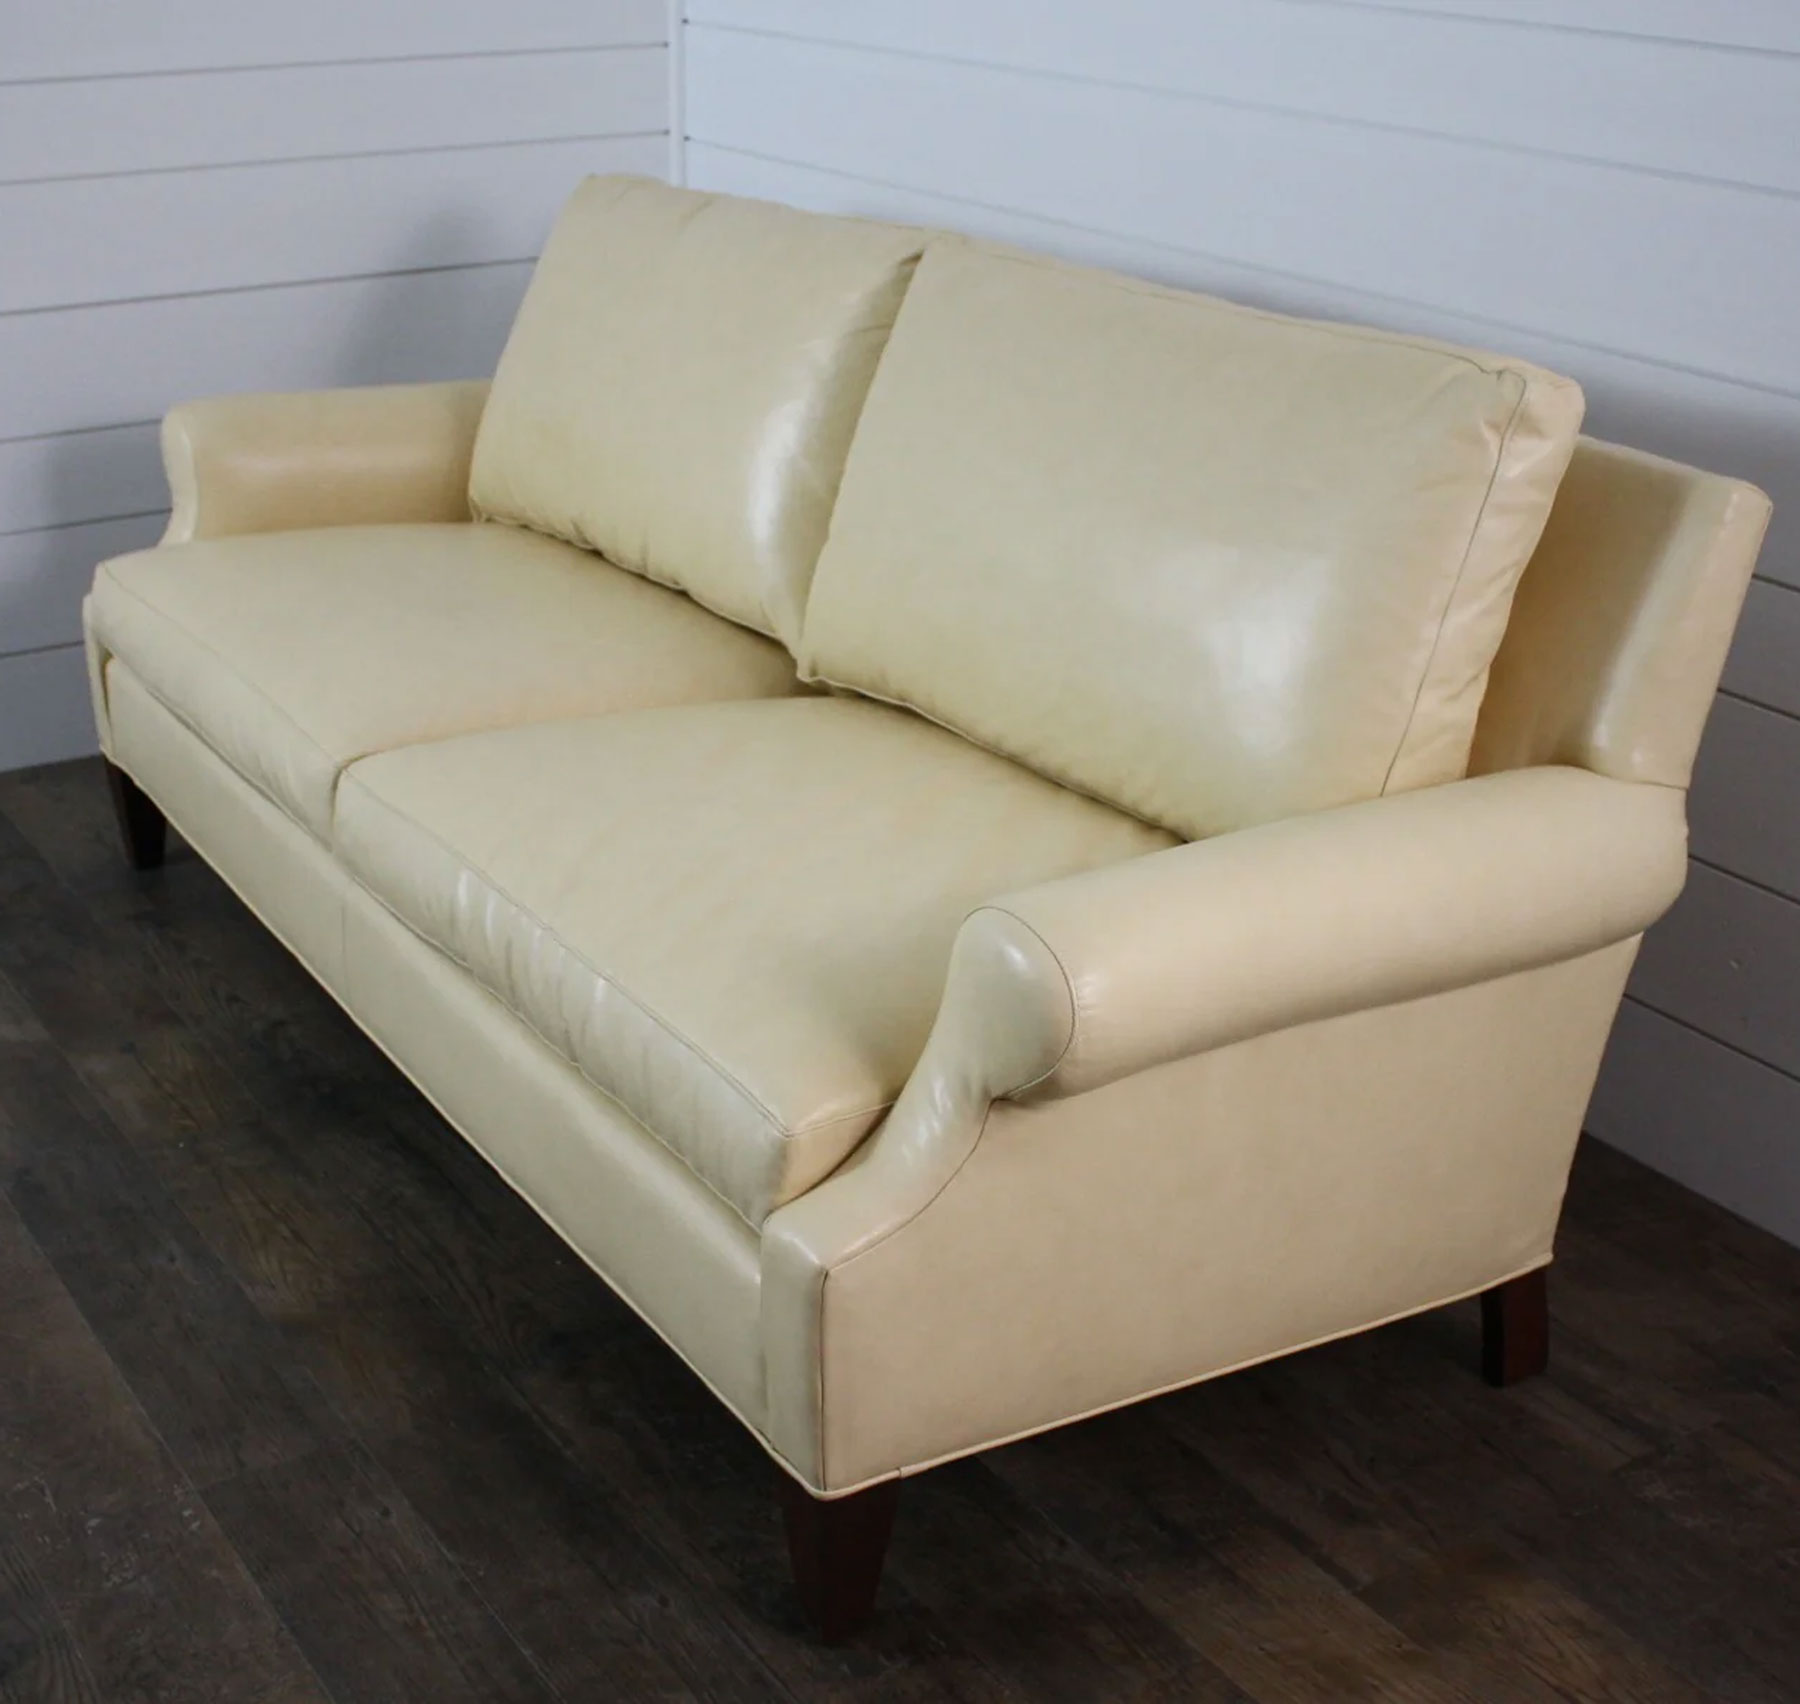 McKinley Leather 1304 Arabella Sofa in Vision Cream Leather